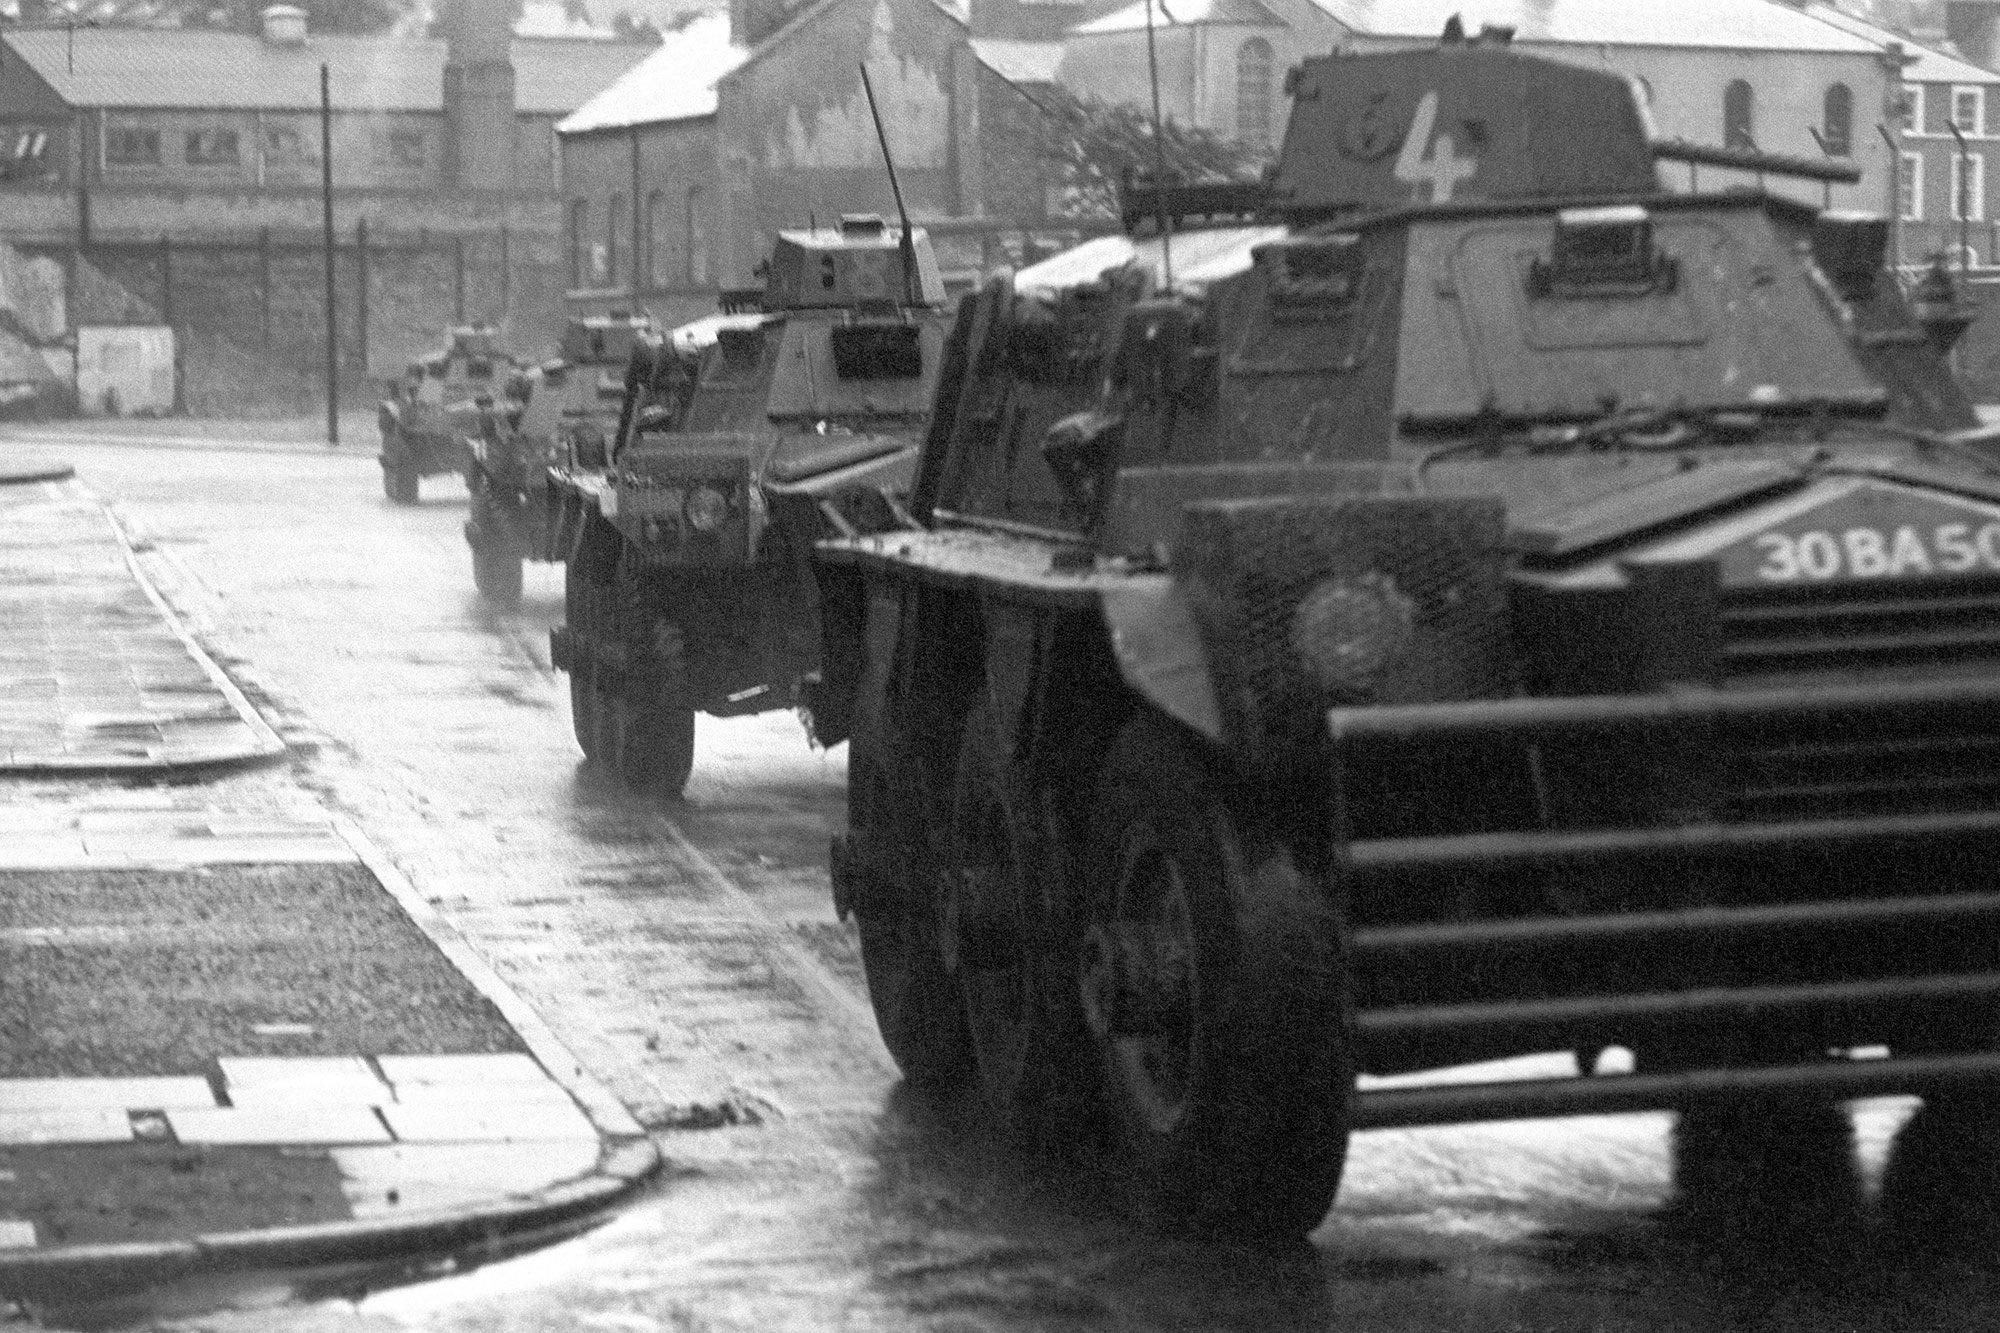 British Troops Arrive In Northern Ireland (Operation Banner)